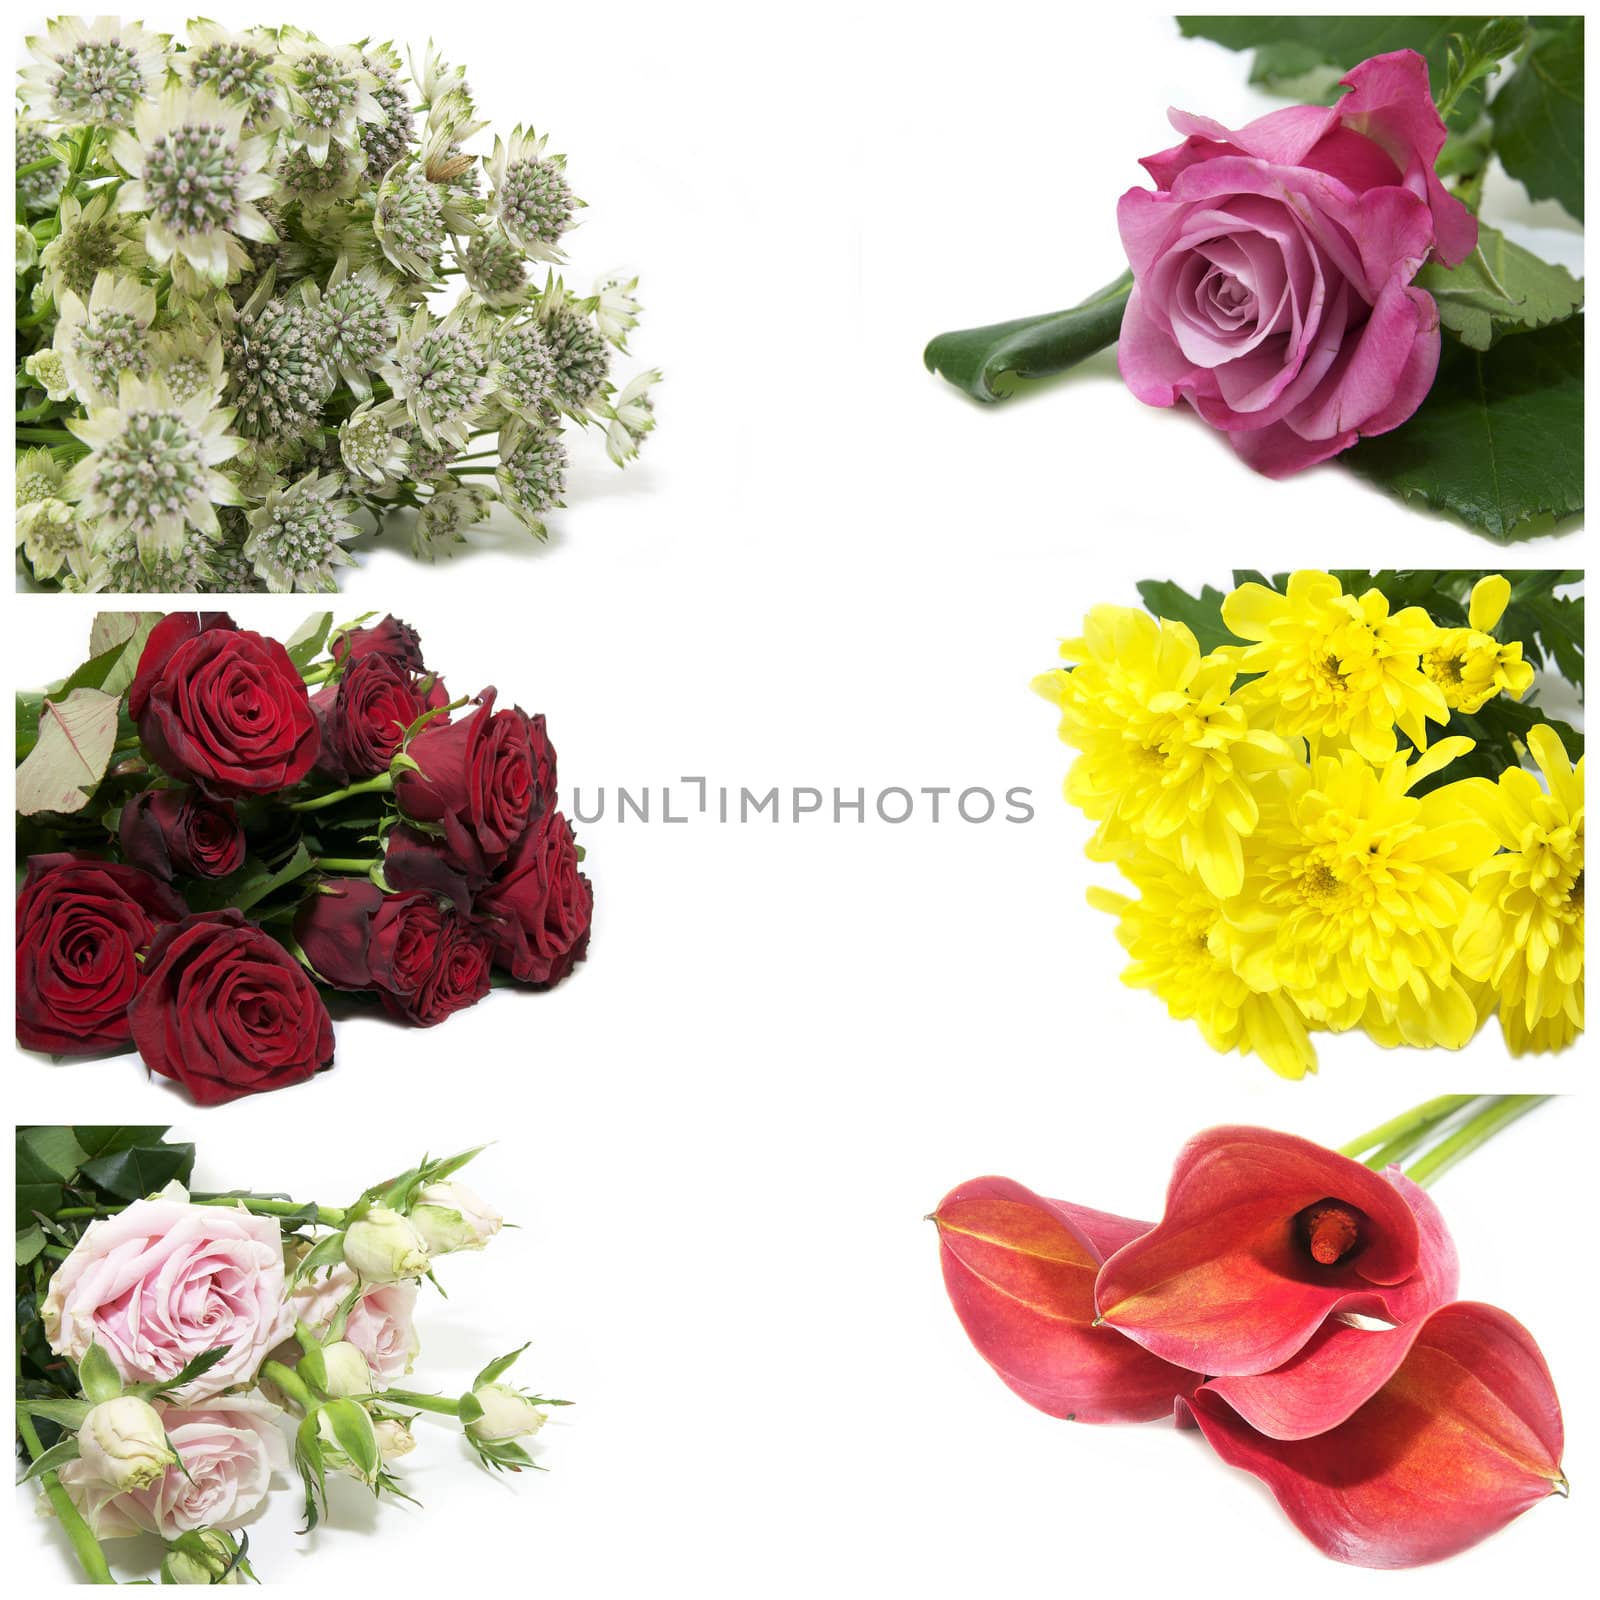 Set photos of flowers